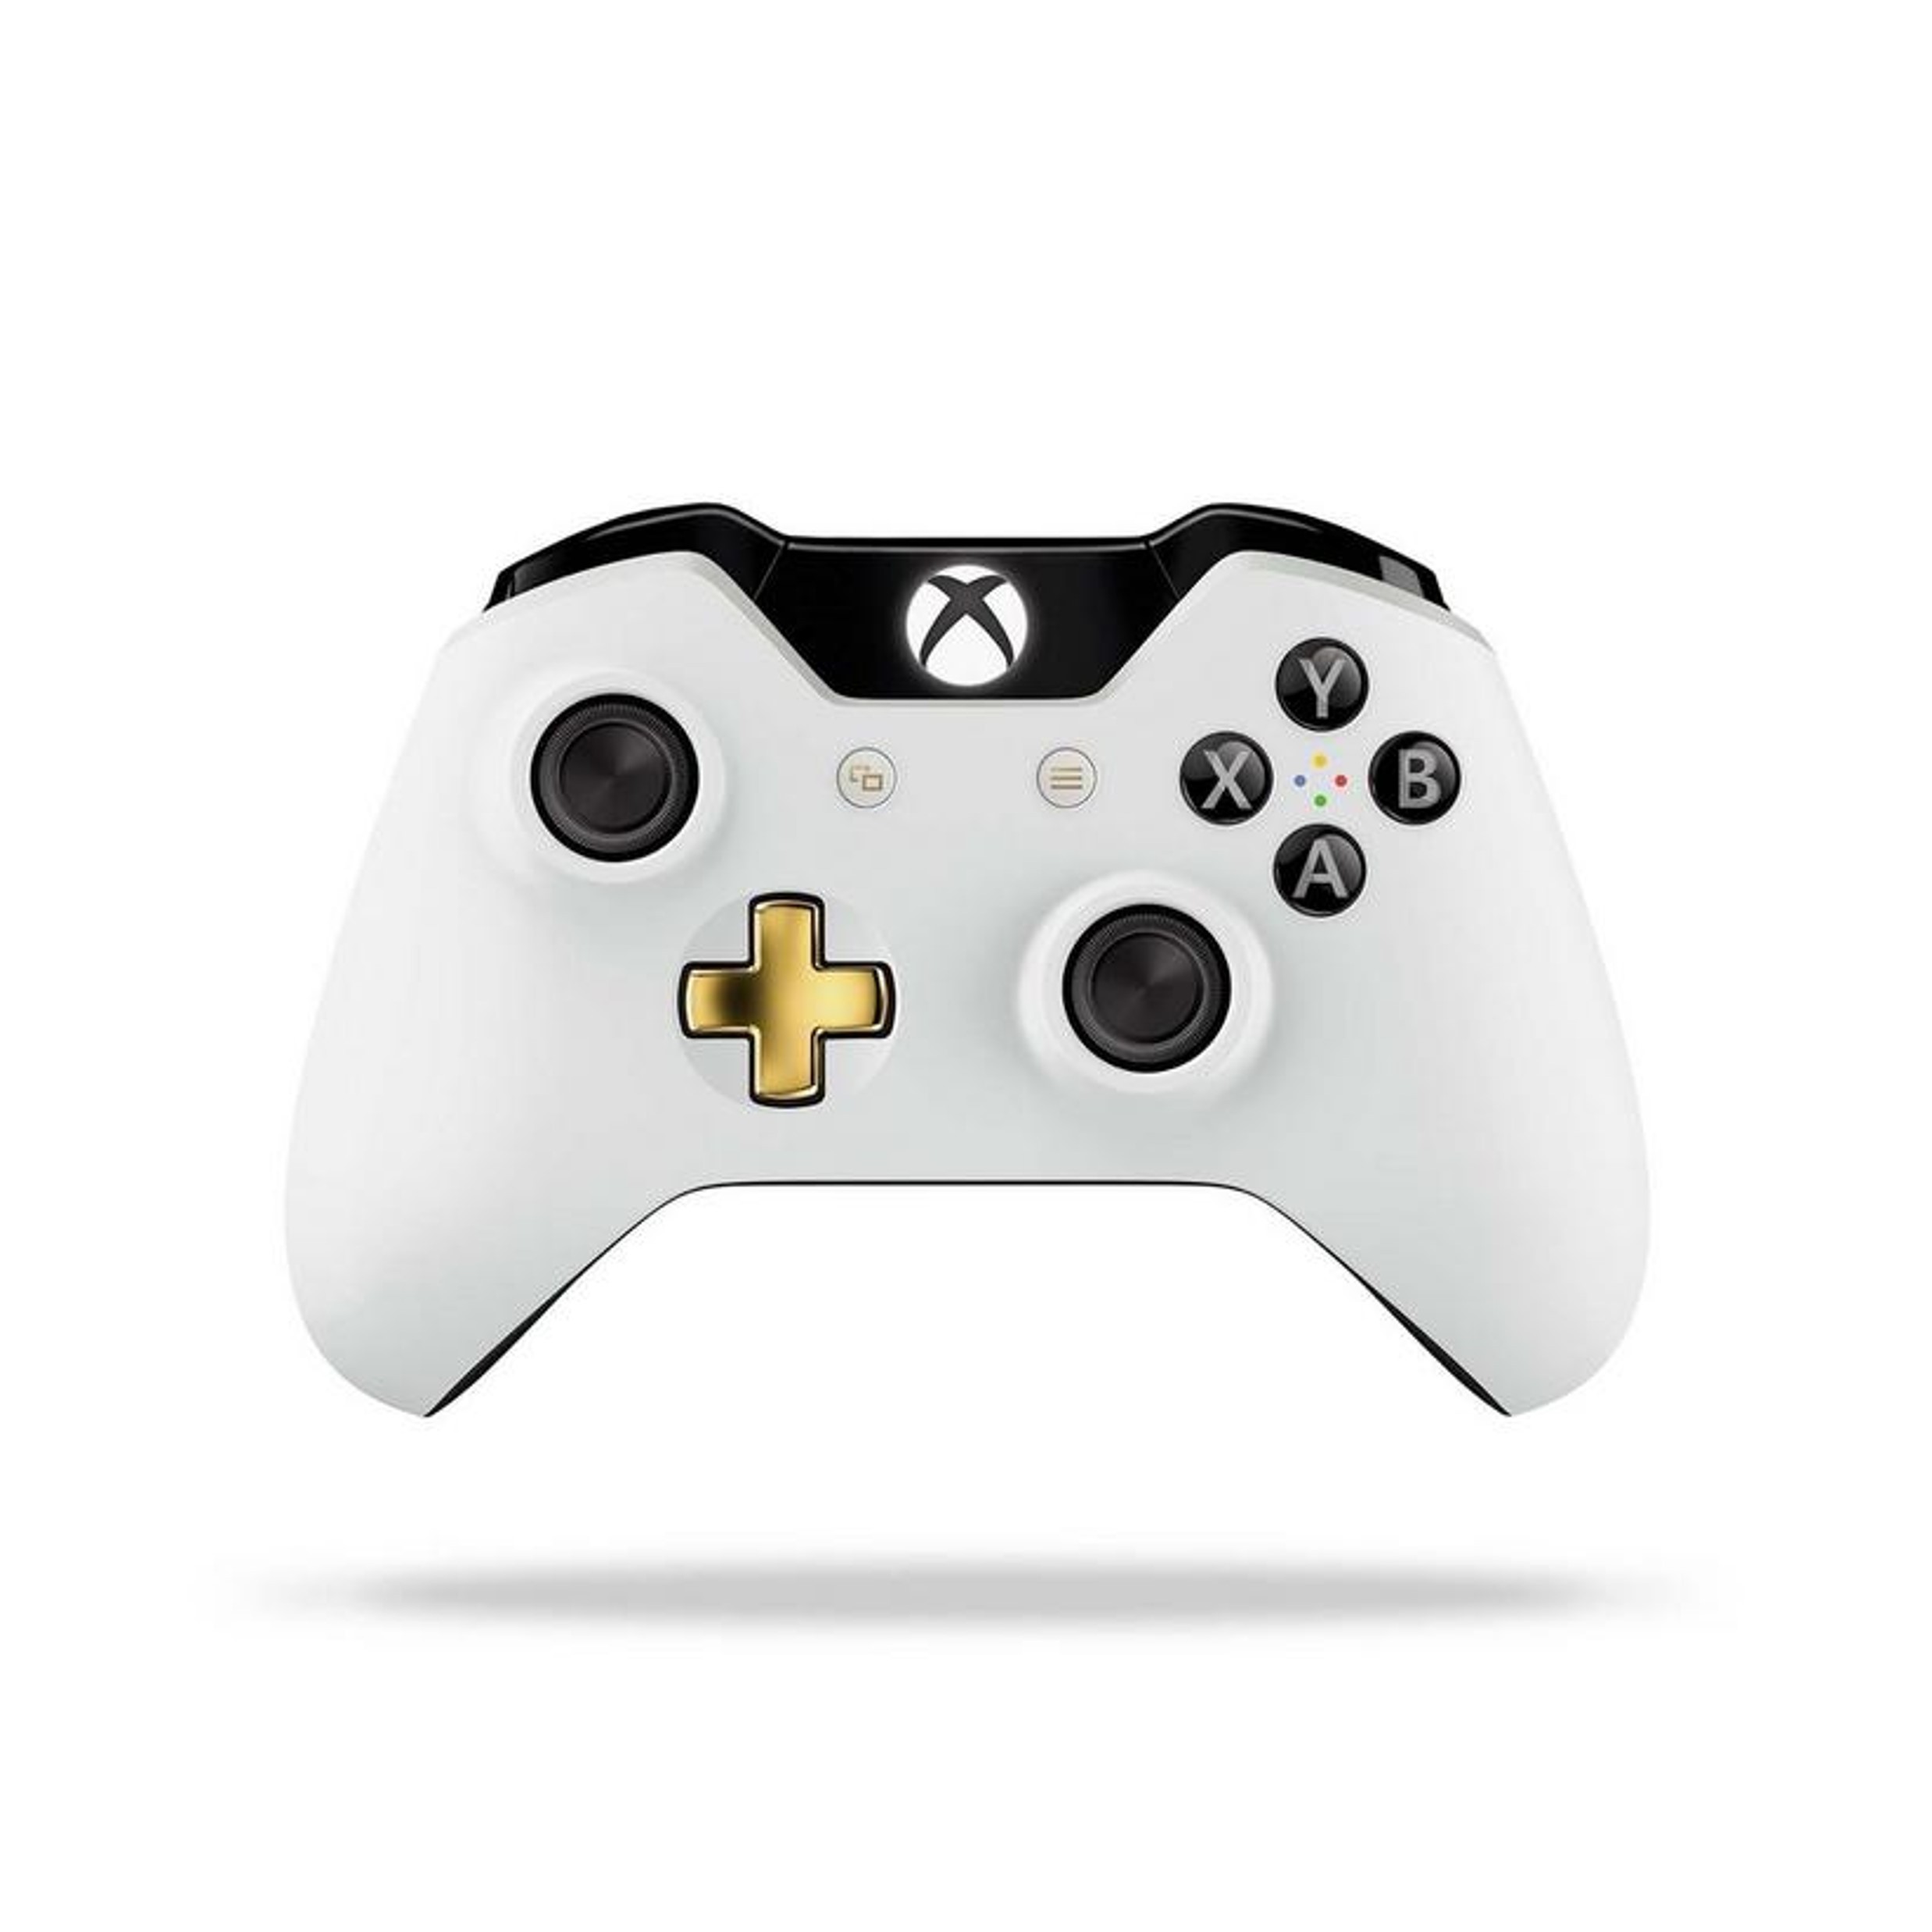 Microsoft Xbox One Controller - Lunar White Edition verkopen binnen minuten.